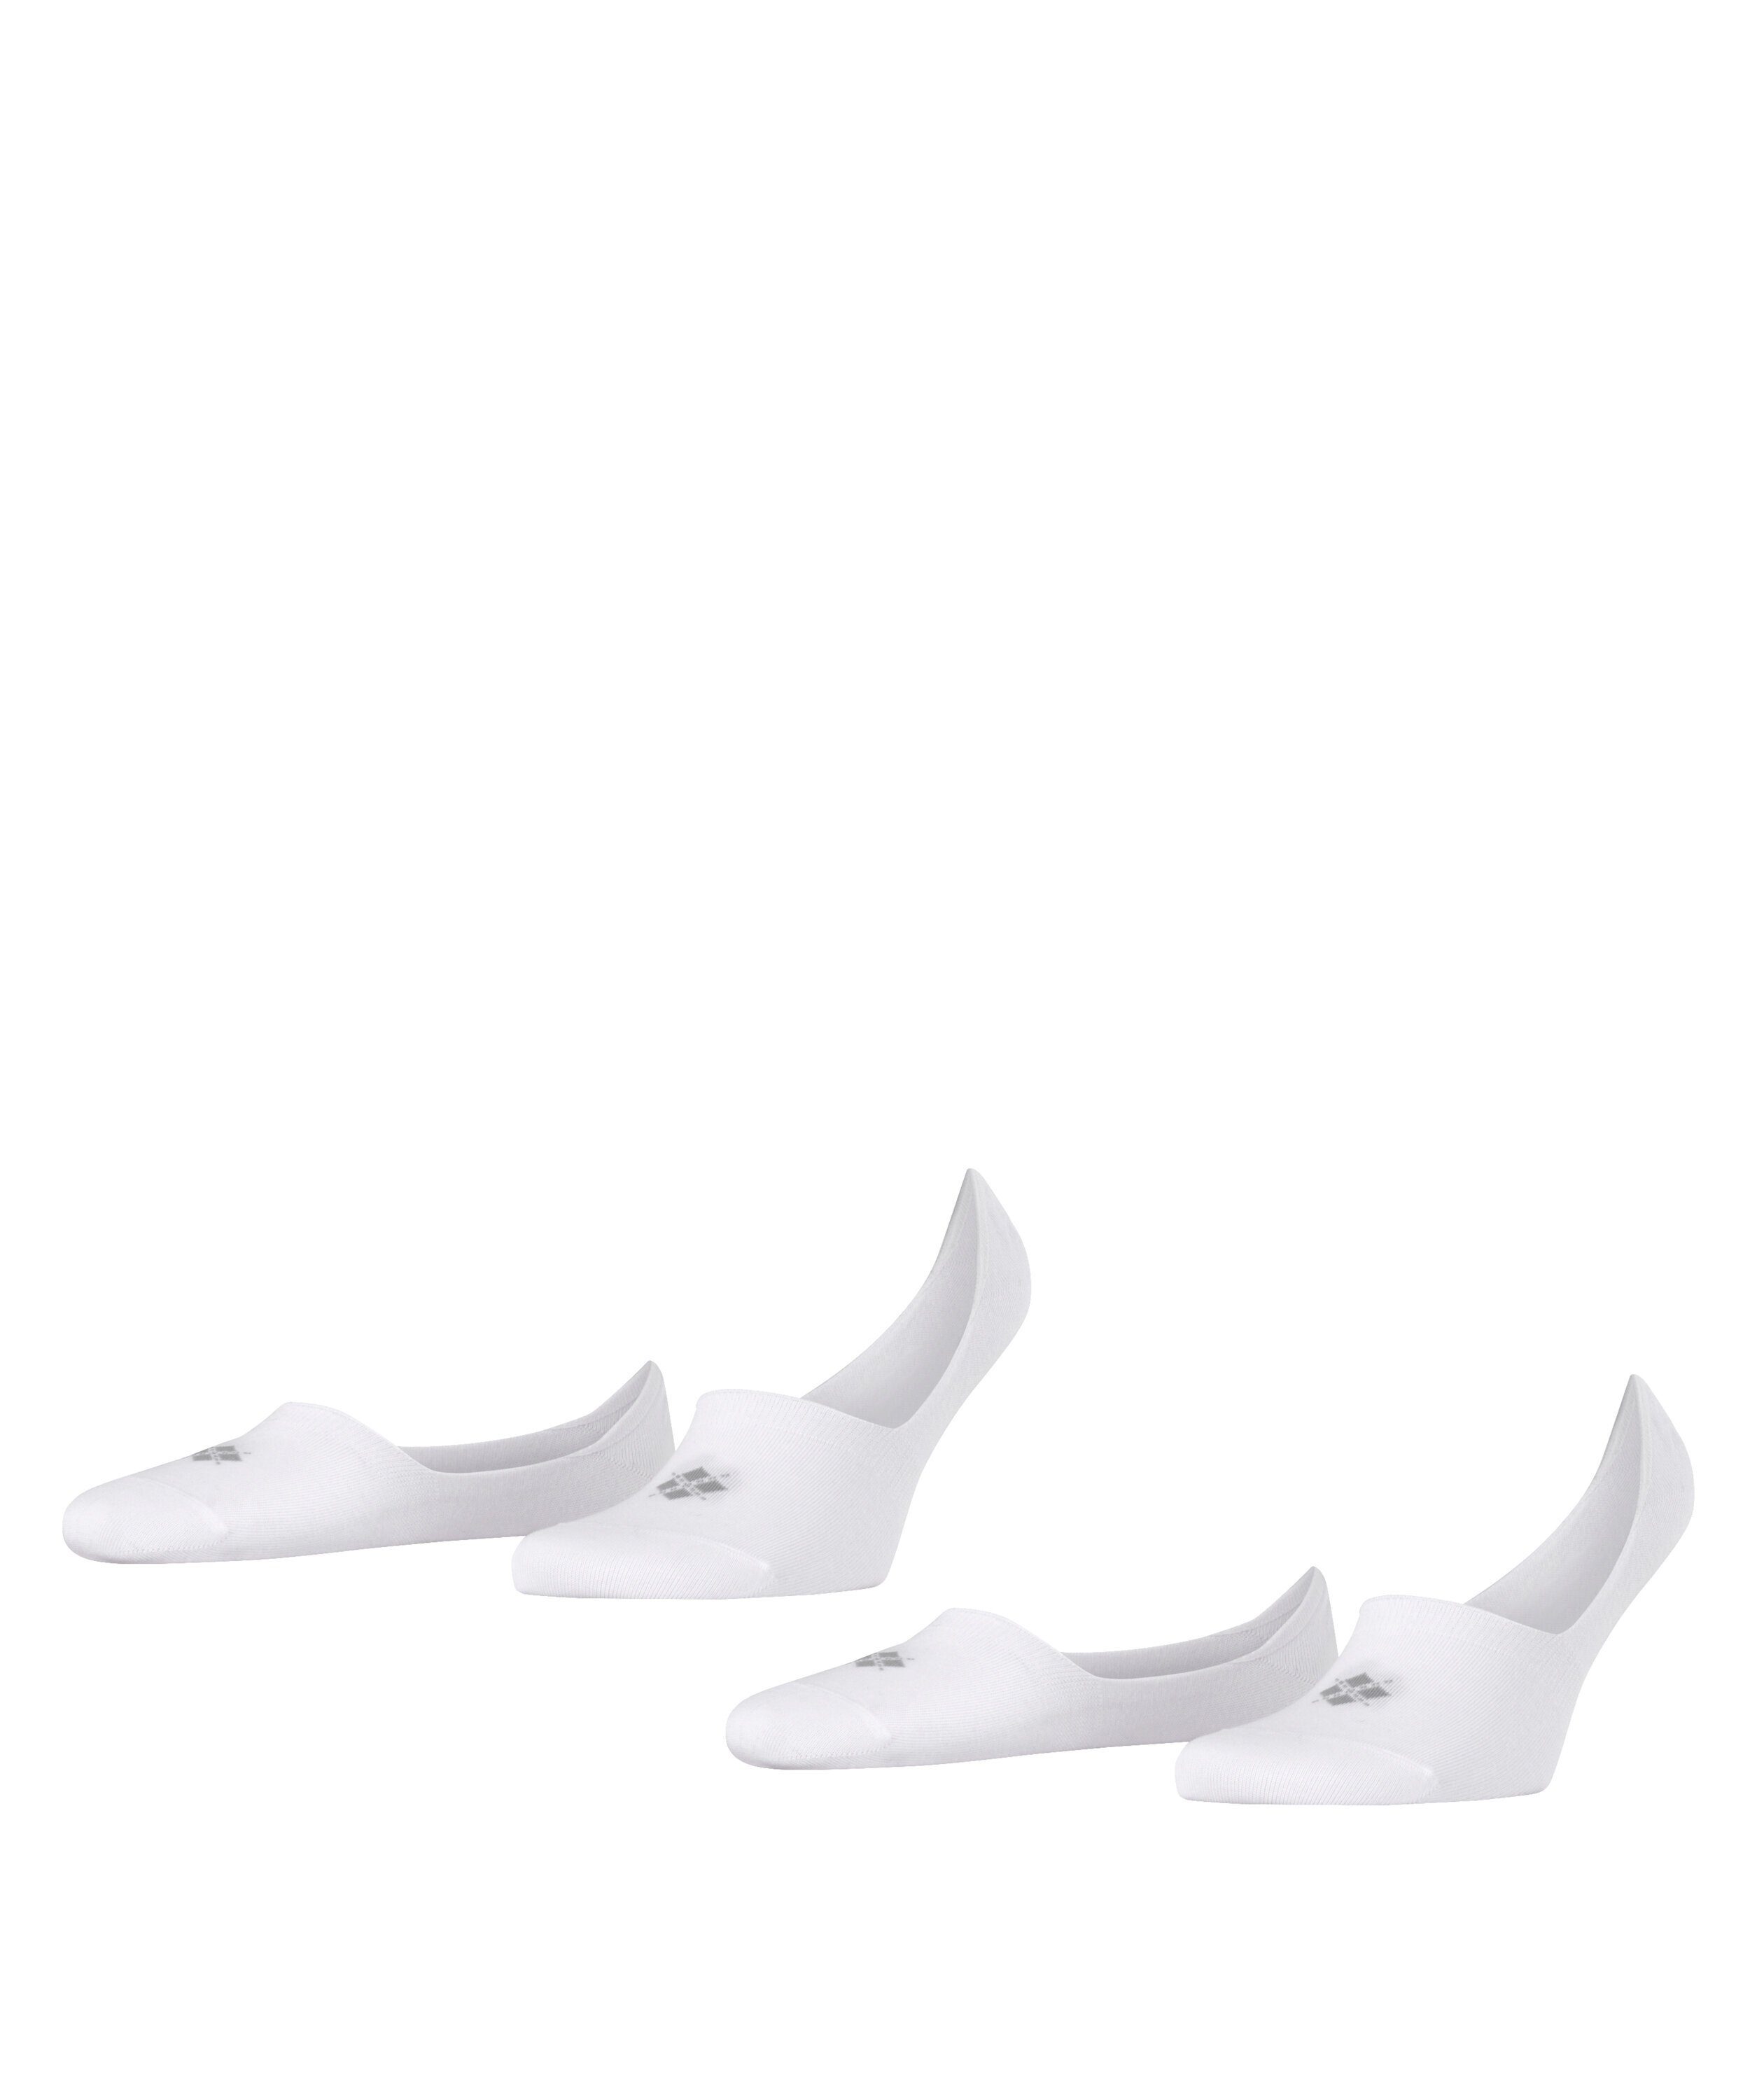 Everyday Burlington mit Anti-Slip-System (2000) 2-Pack Füßlinge white